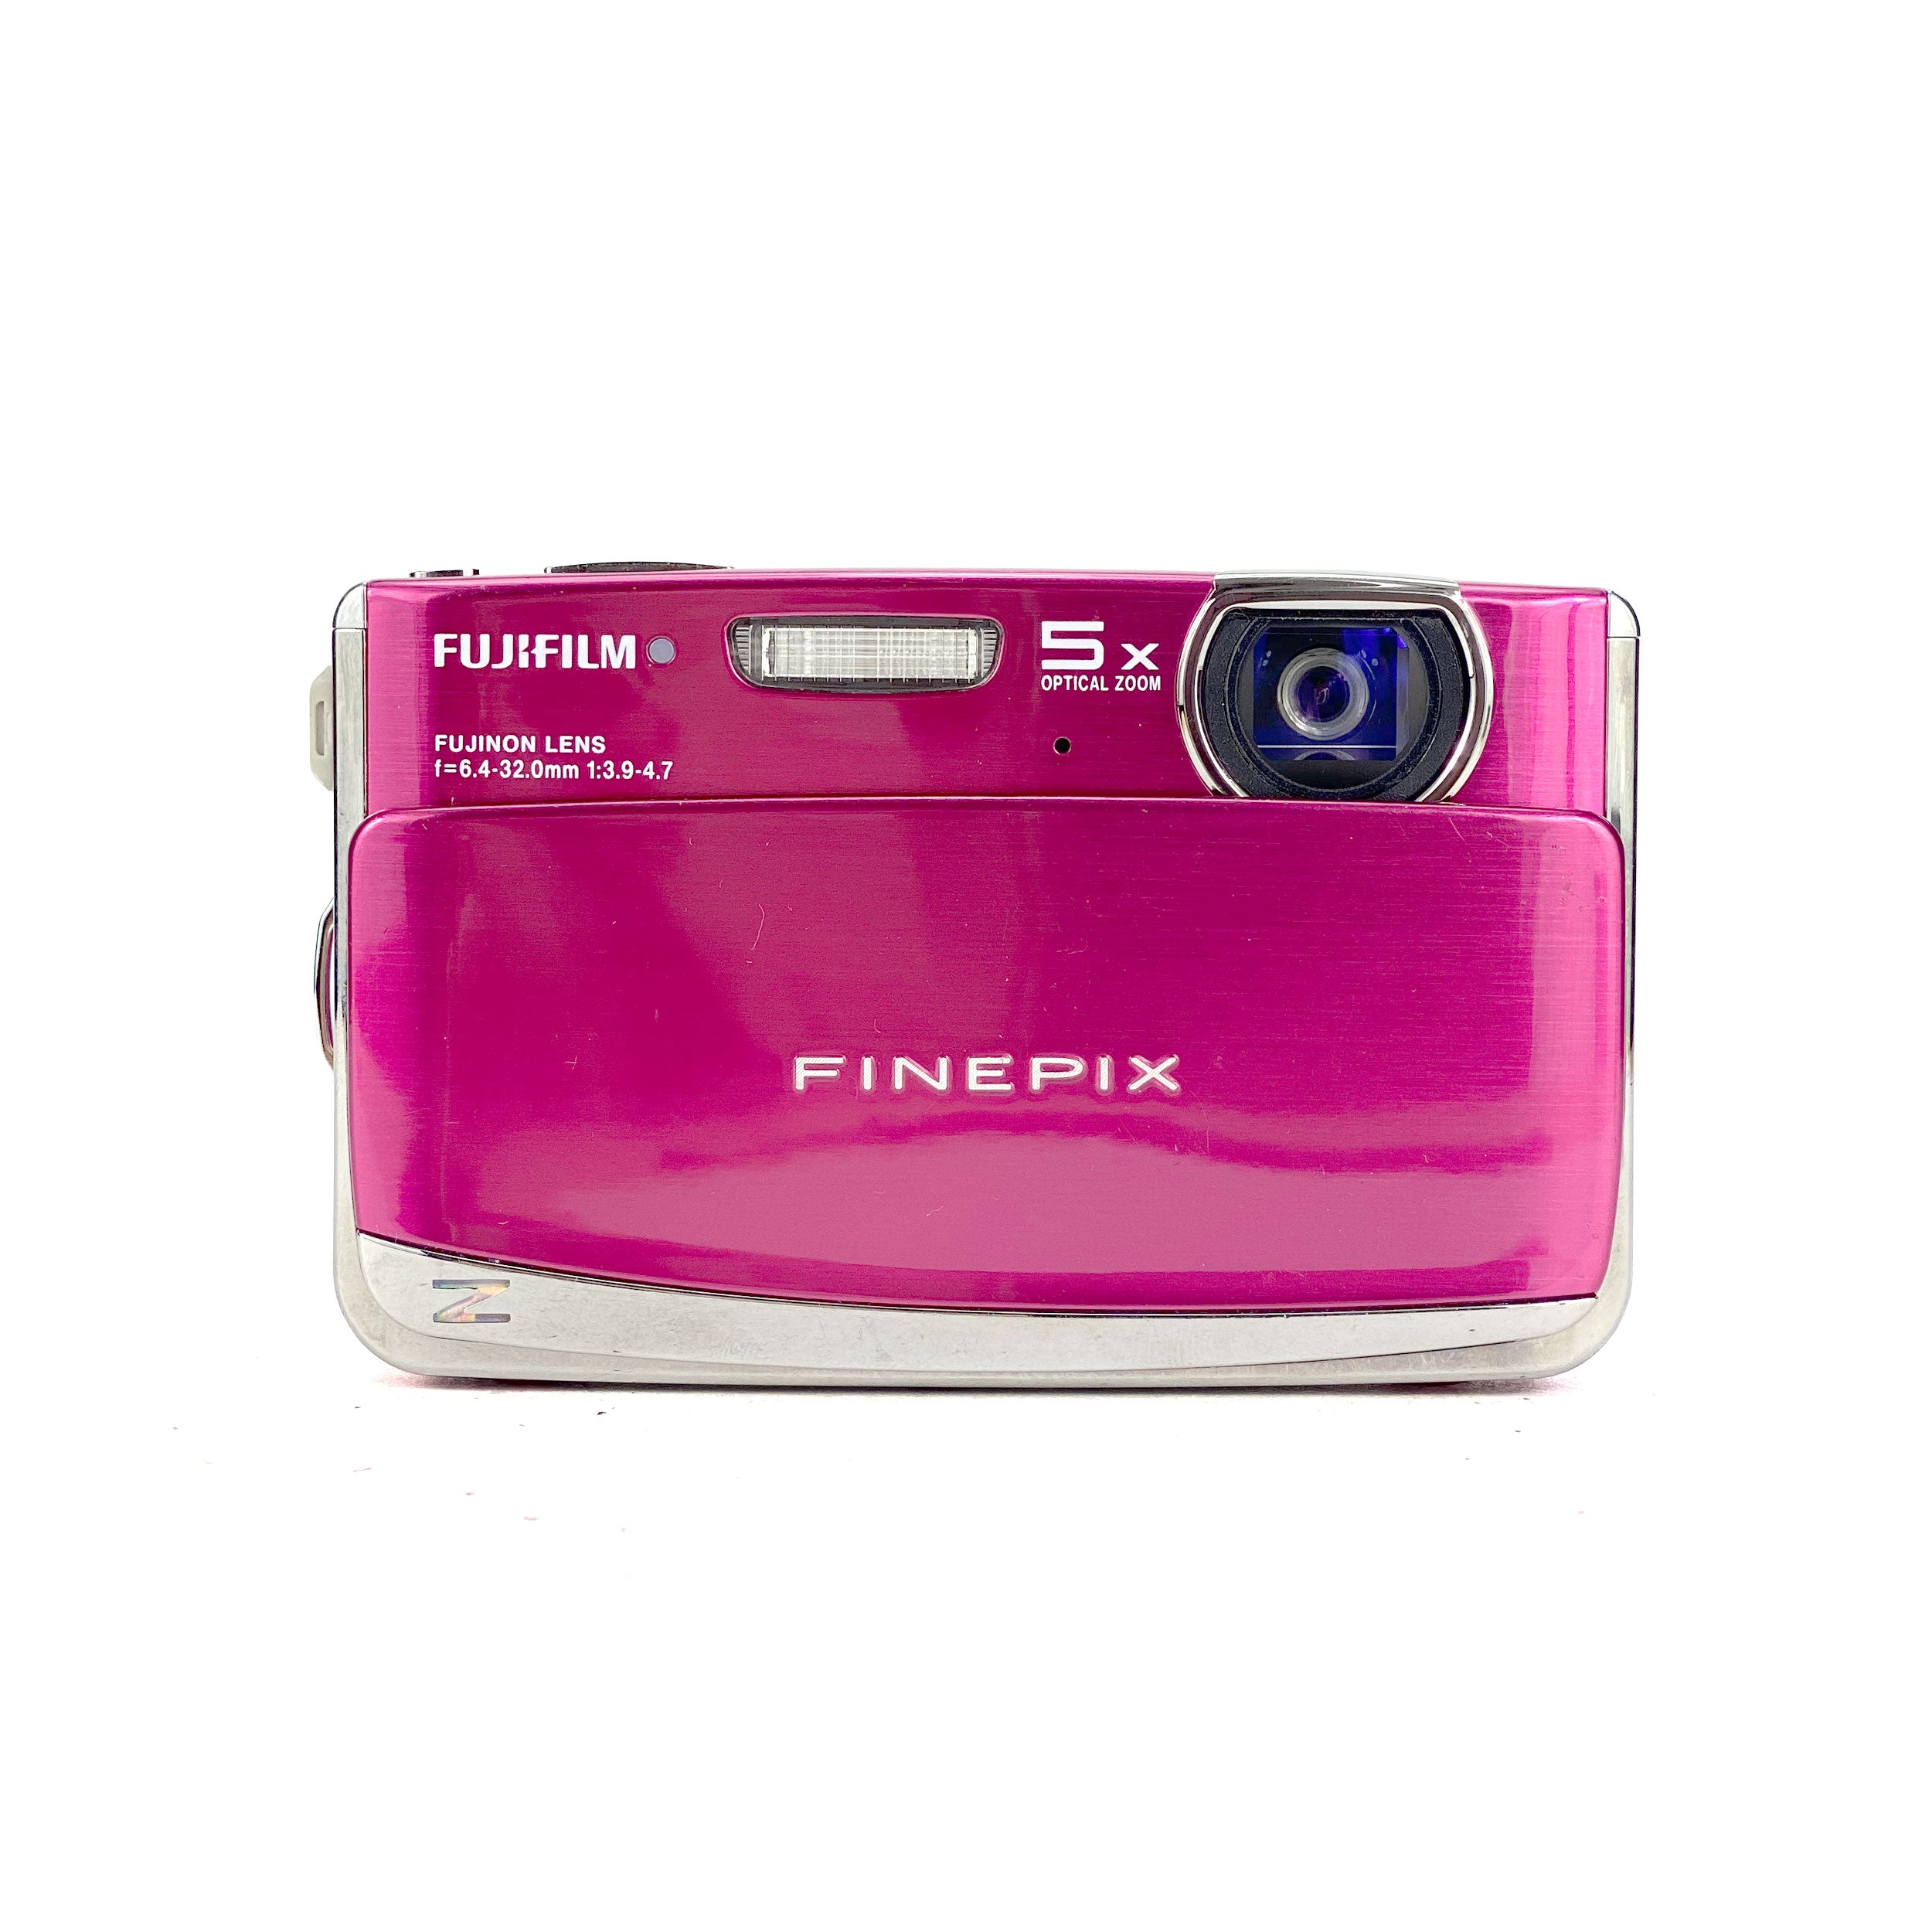 Fujifilm FinePix Z70 Digital Compact